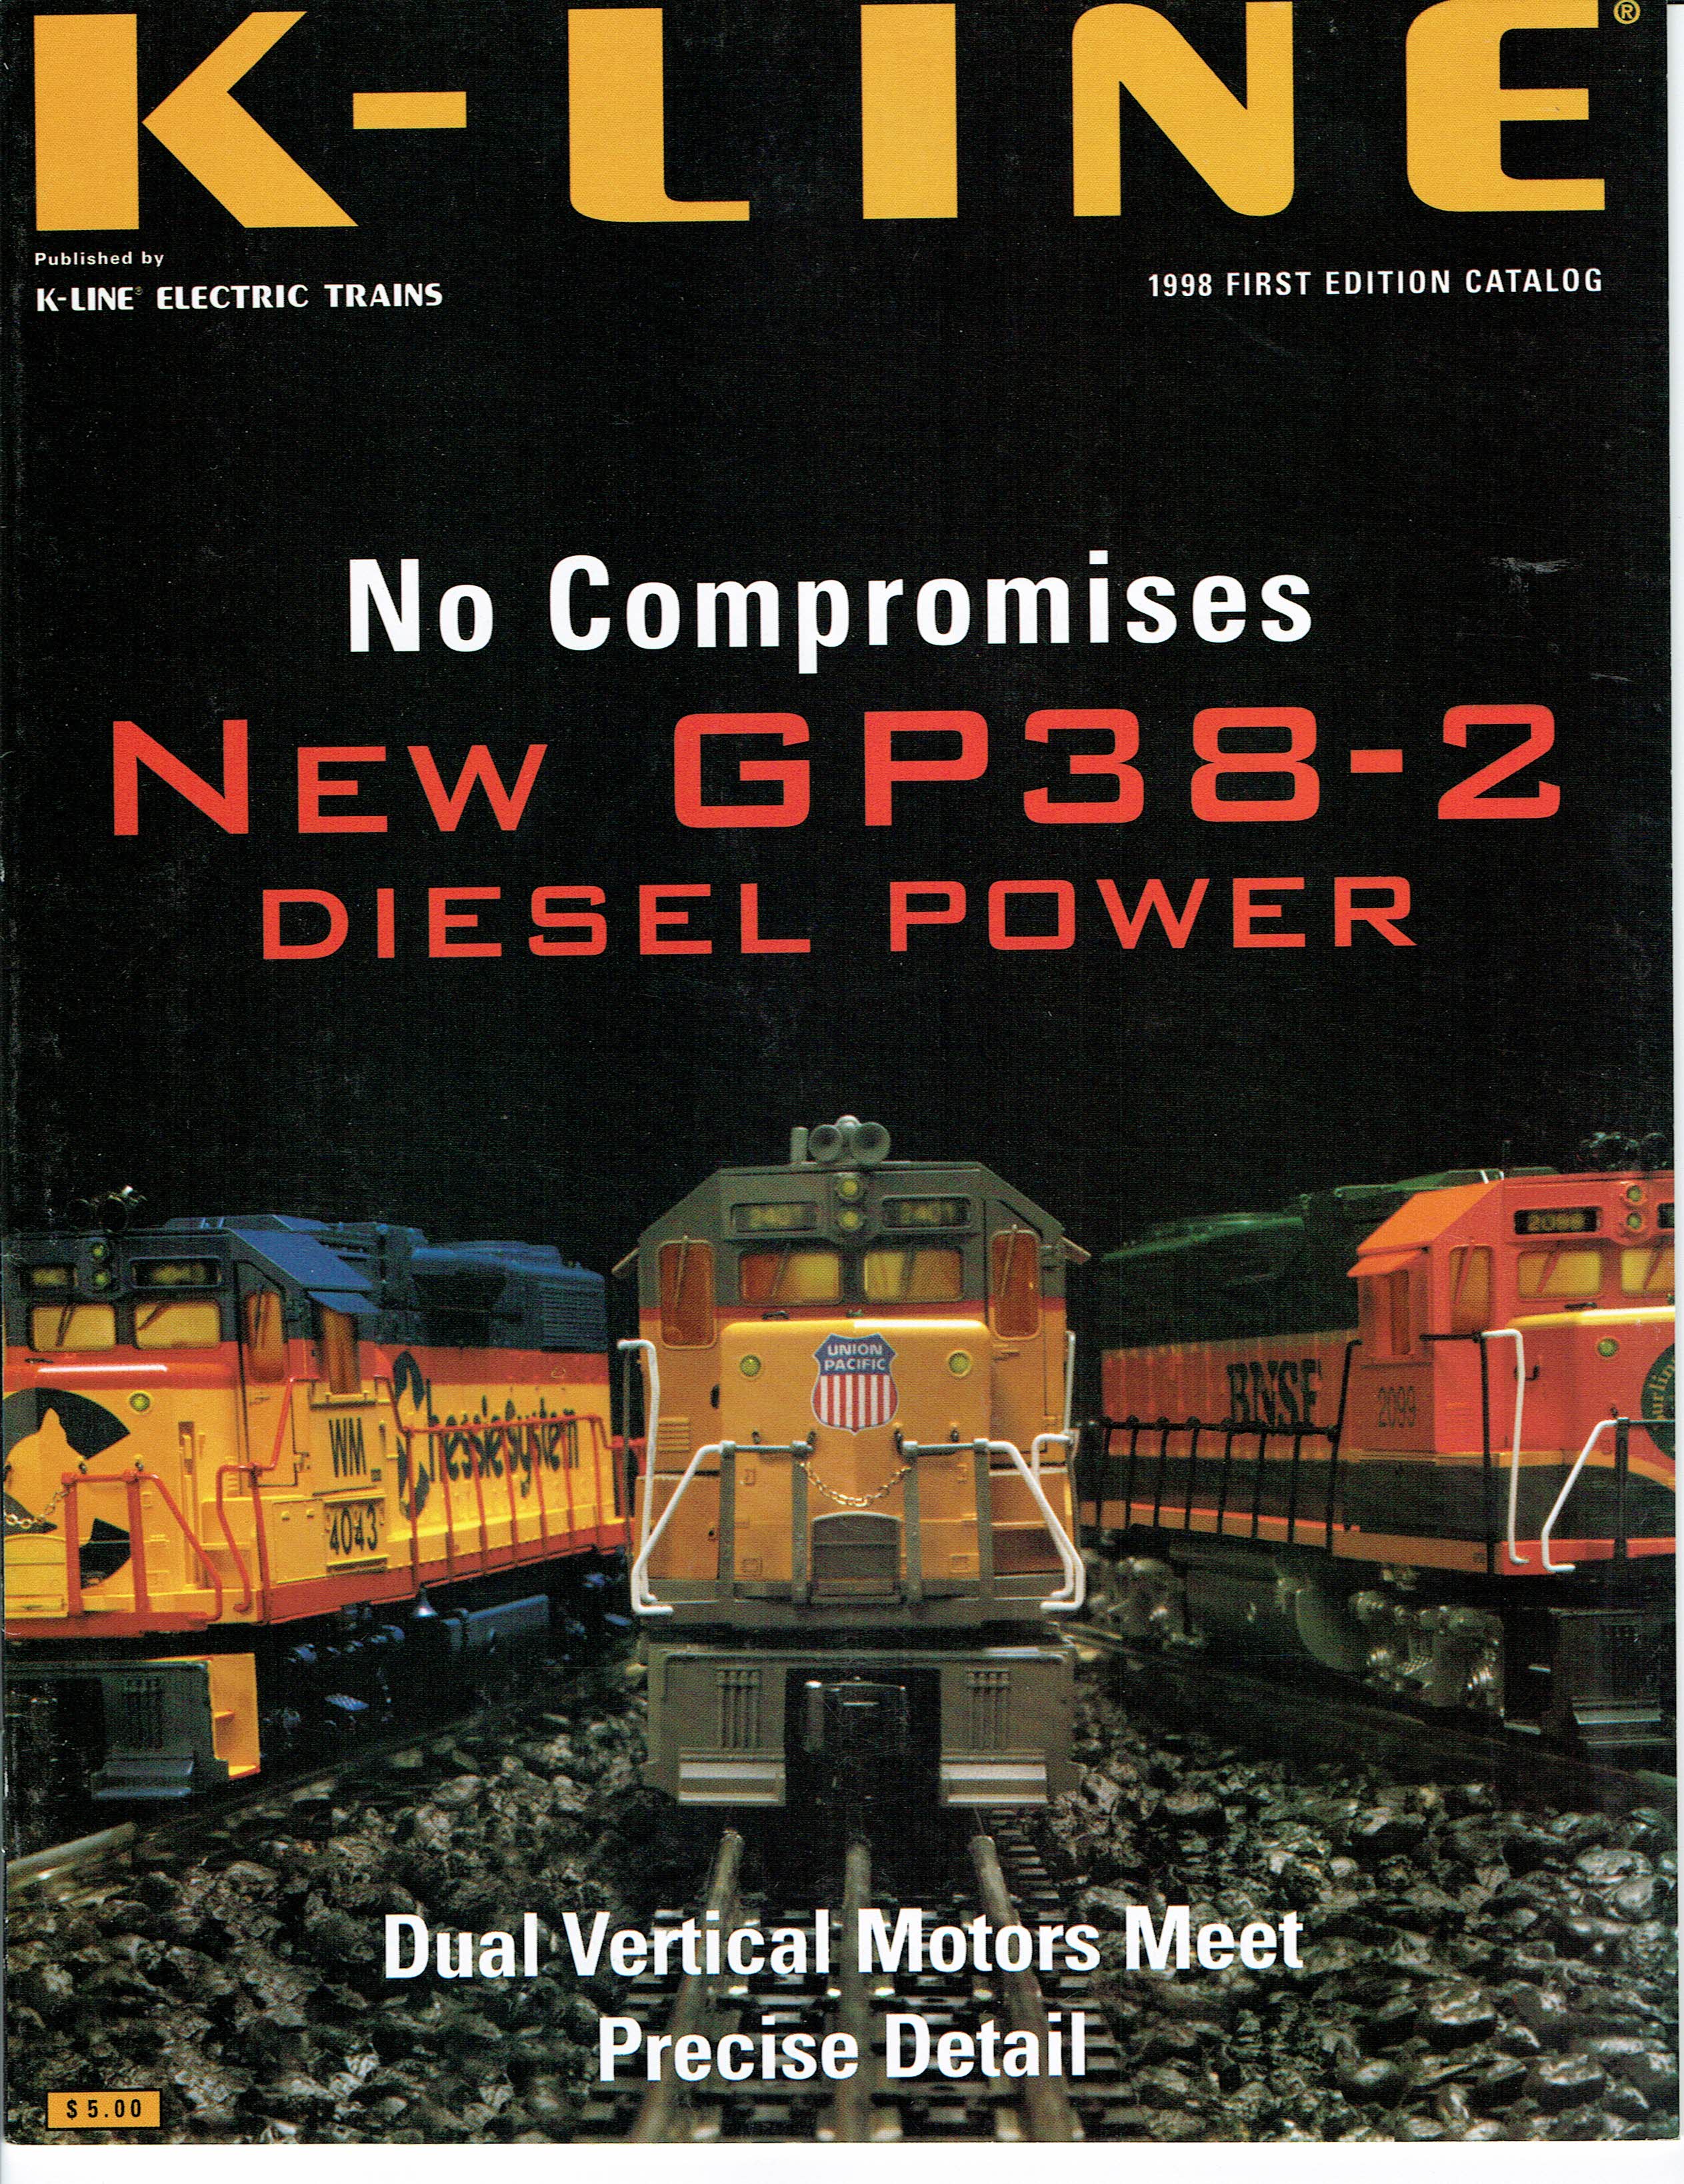 K-Line 1998 1st Edition Catalog image